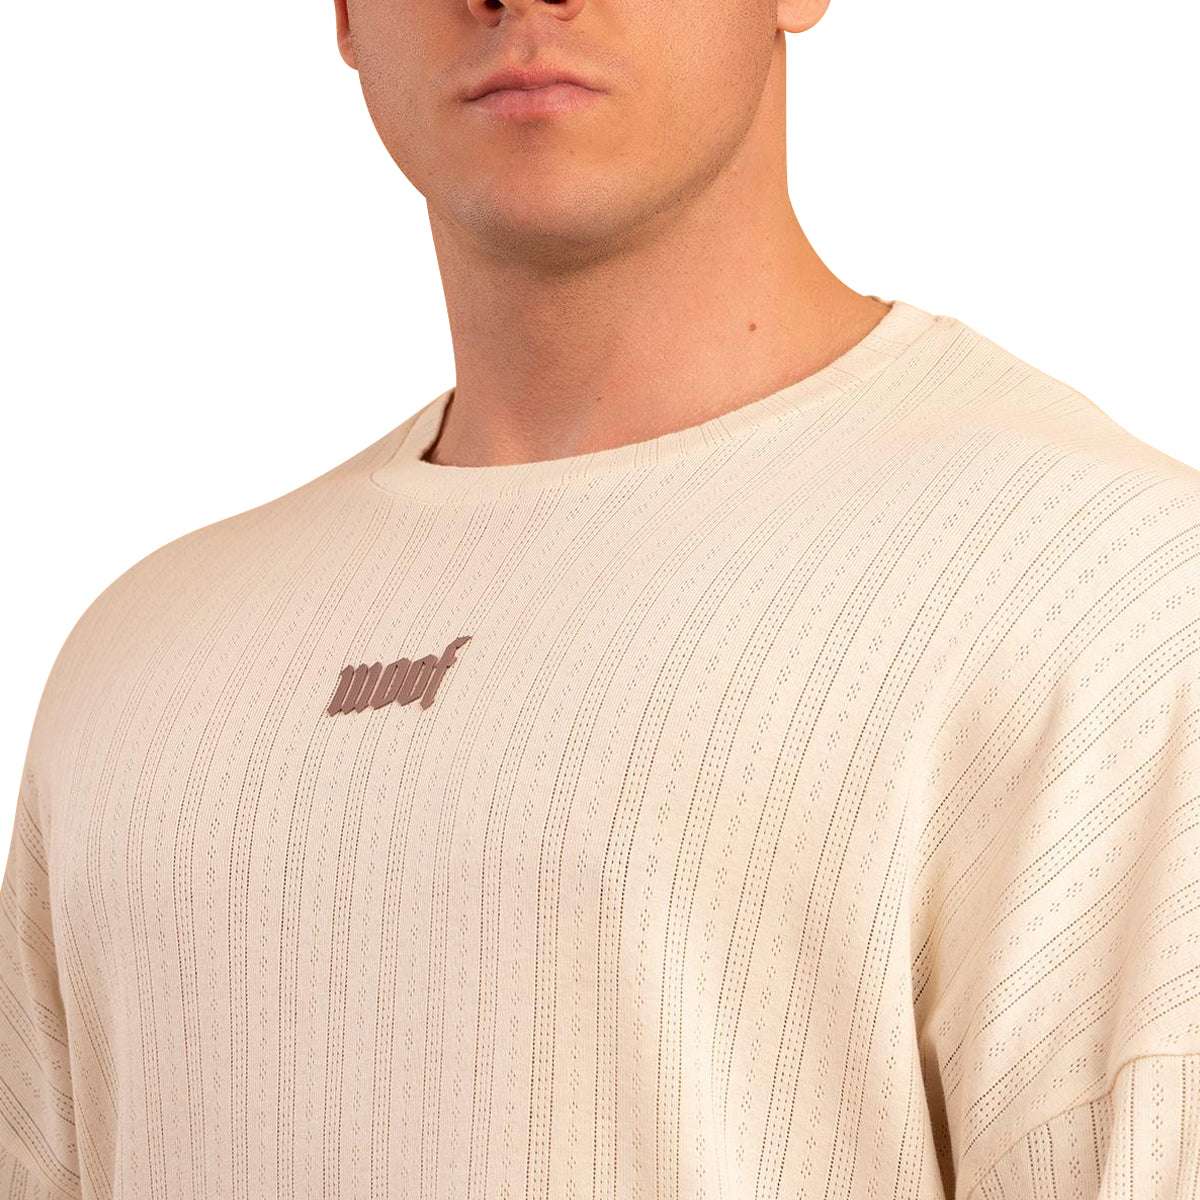 Camiseta extragrande con estampado 3D Woof Crudo